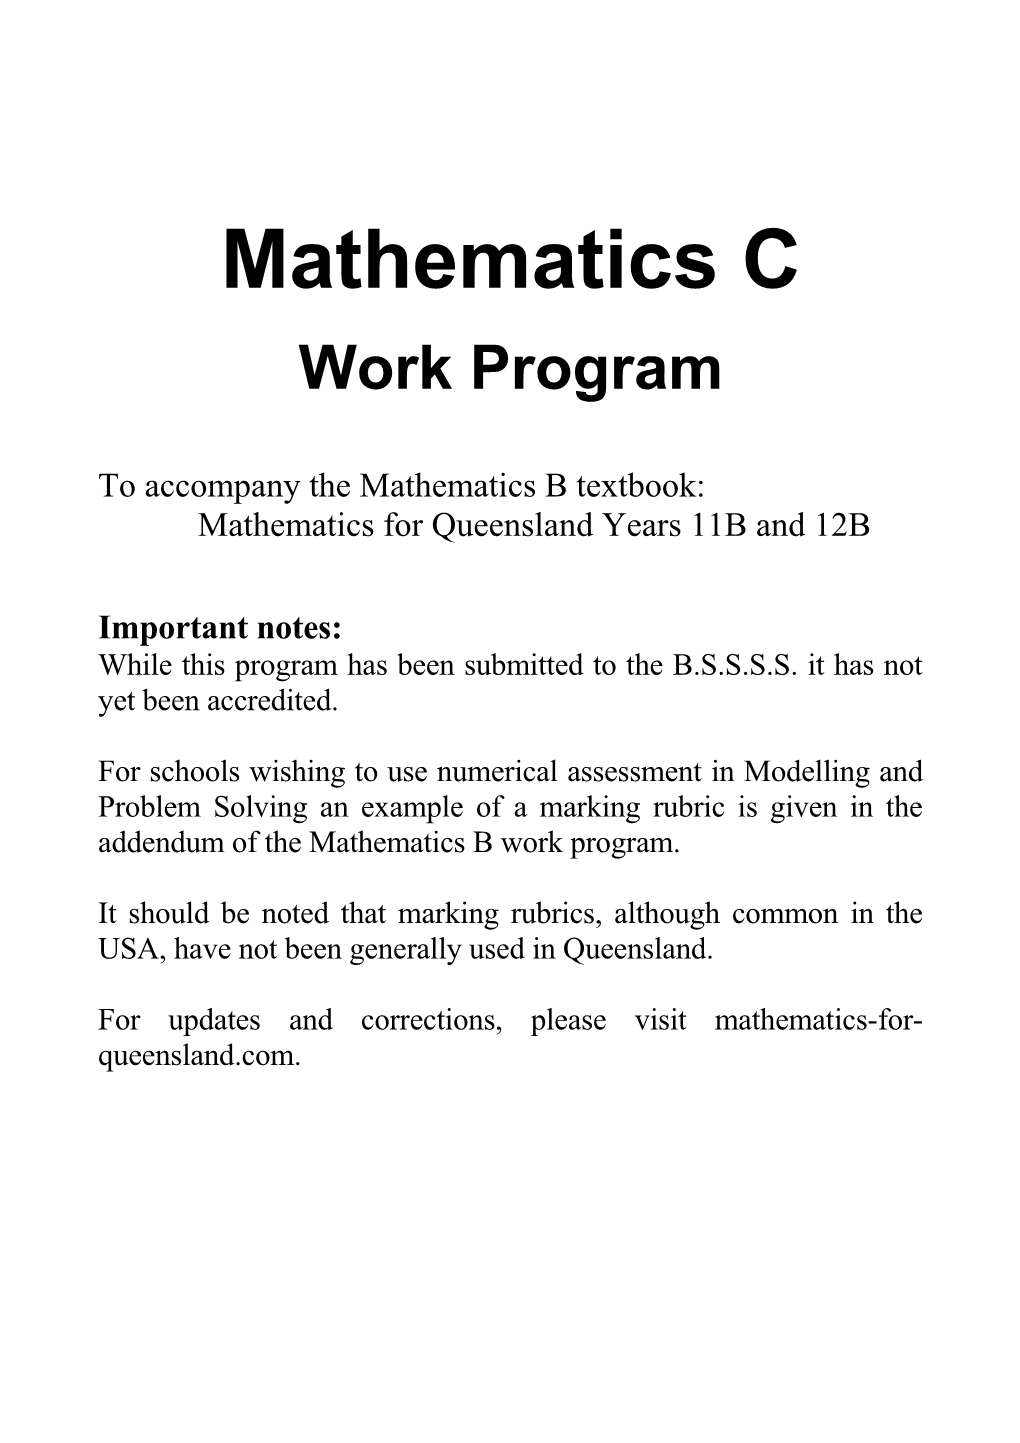 To Accompany the Mathematics B Textbook: Mathematics for Queensland Years 11B and 12B